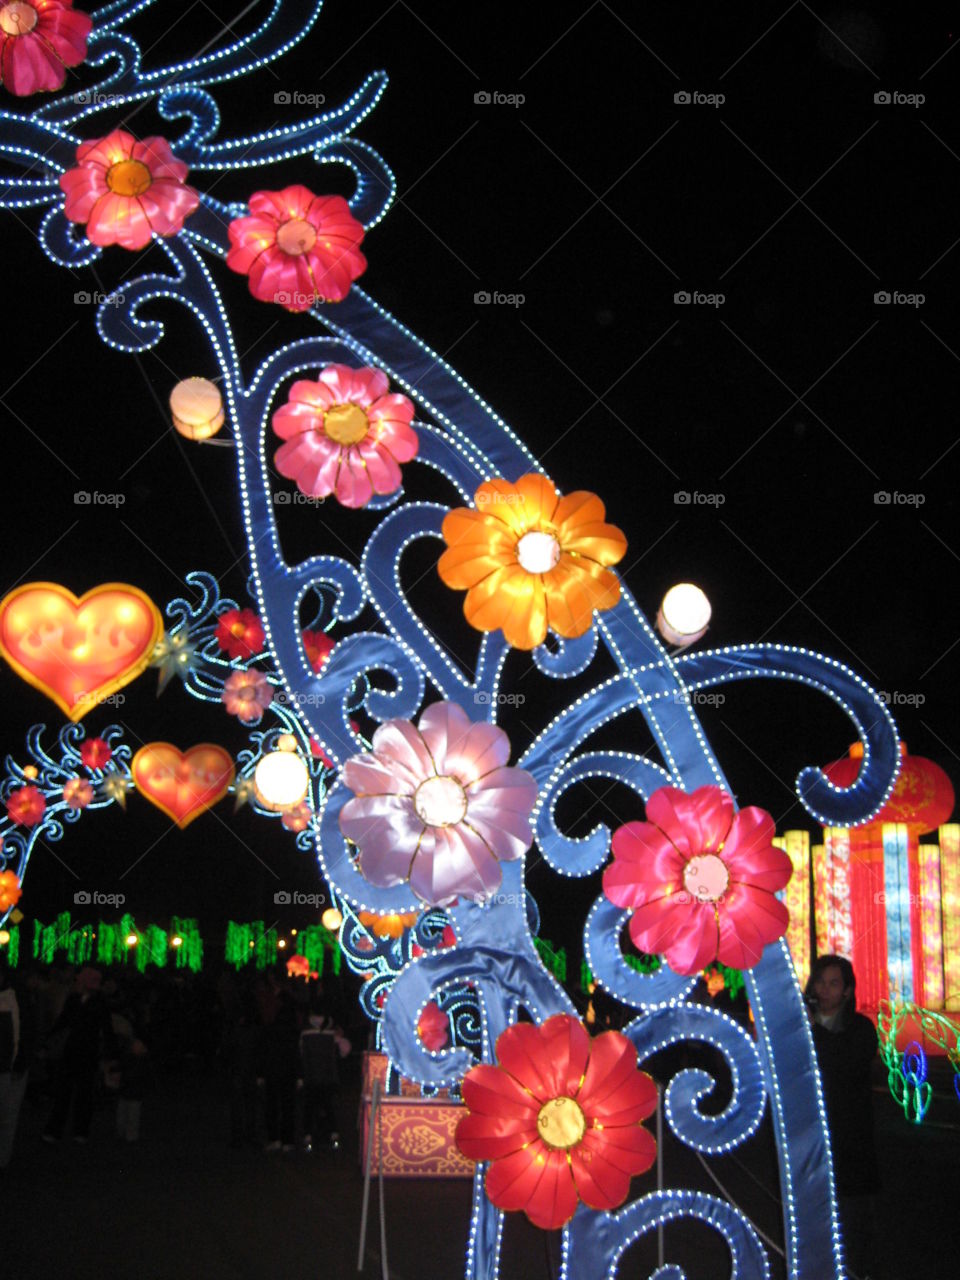 Floral Decorations. Festive floral lights